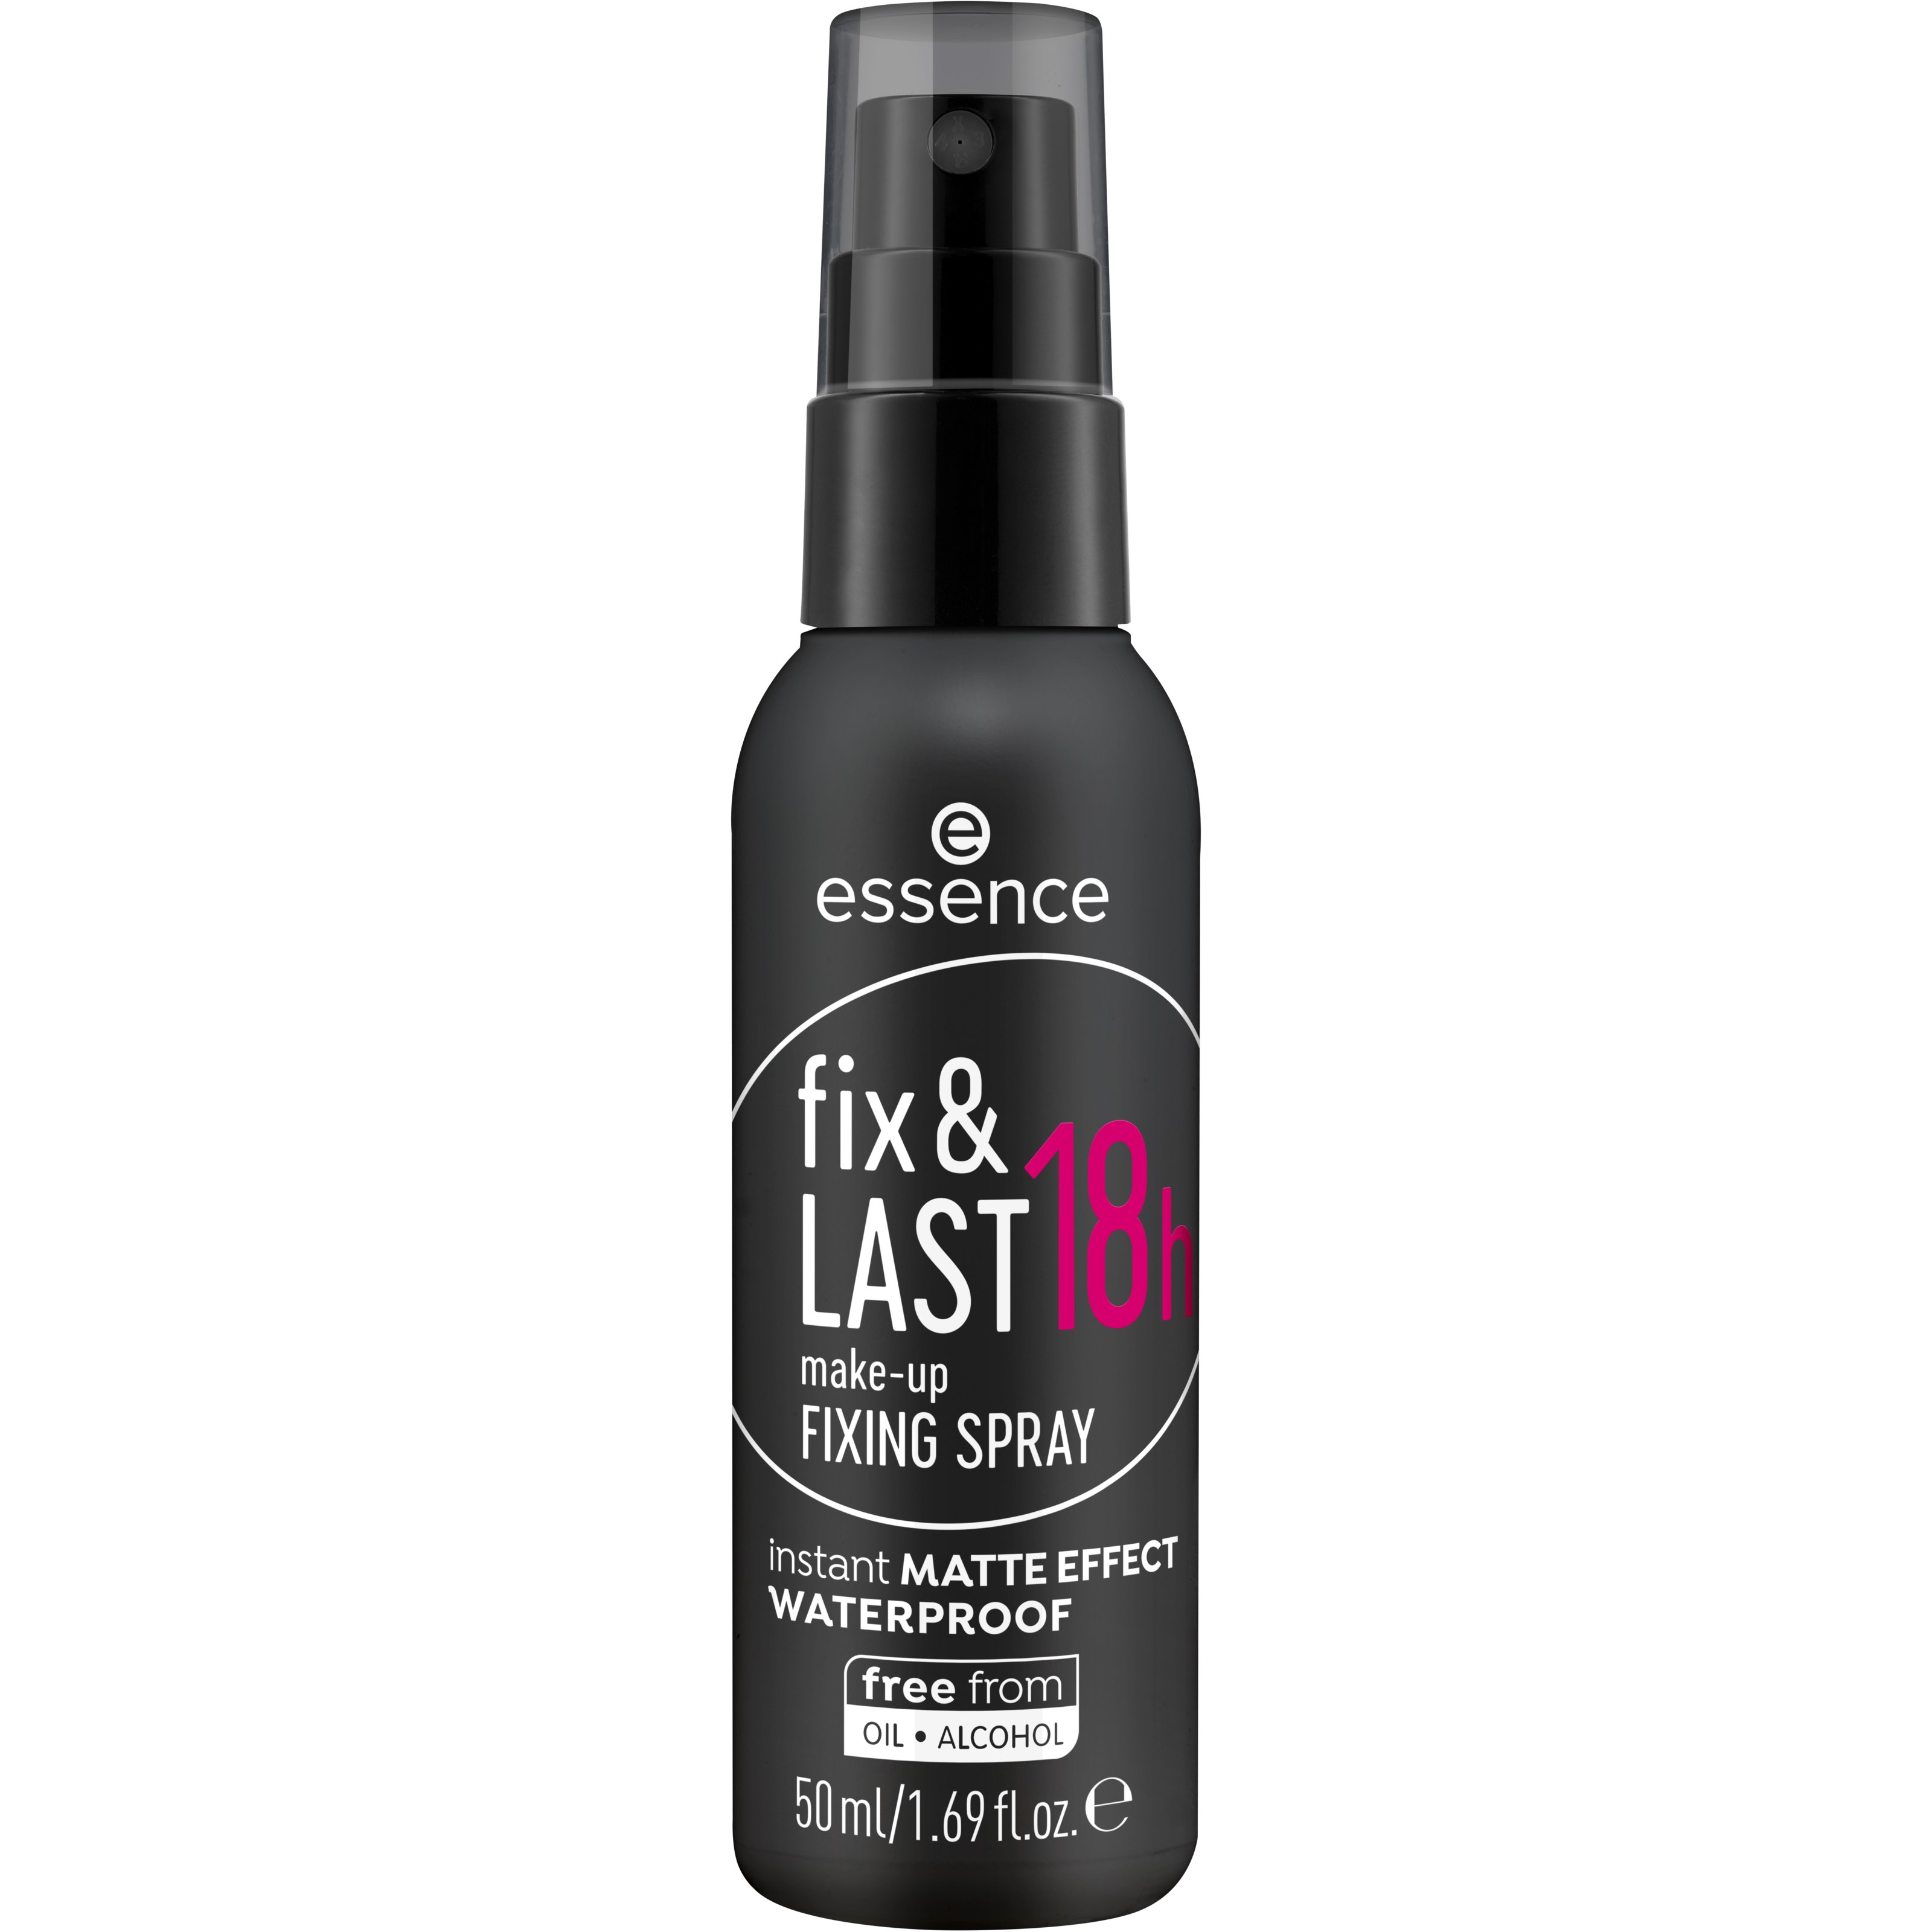 essence Fix & Last 18h Make-up Fixing Spray 50 ml